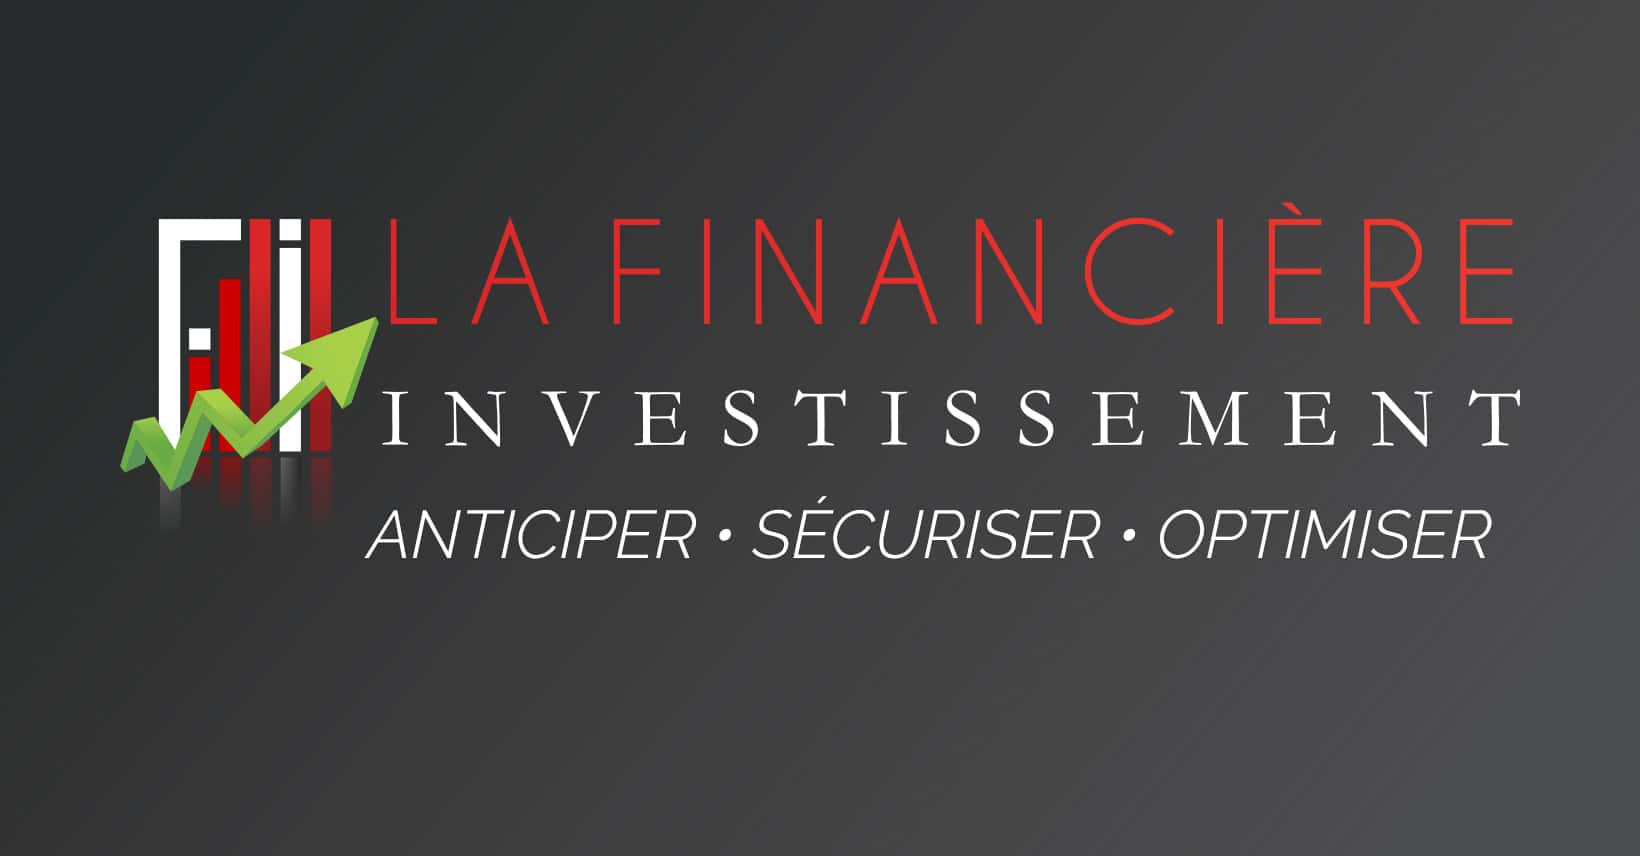 (c) Financiere-investissement.fr